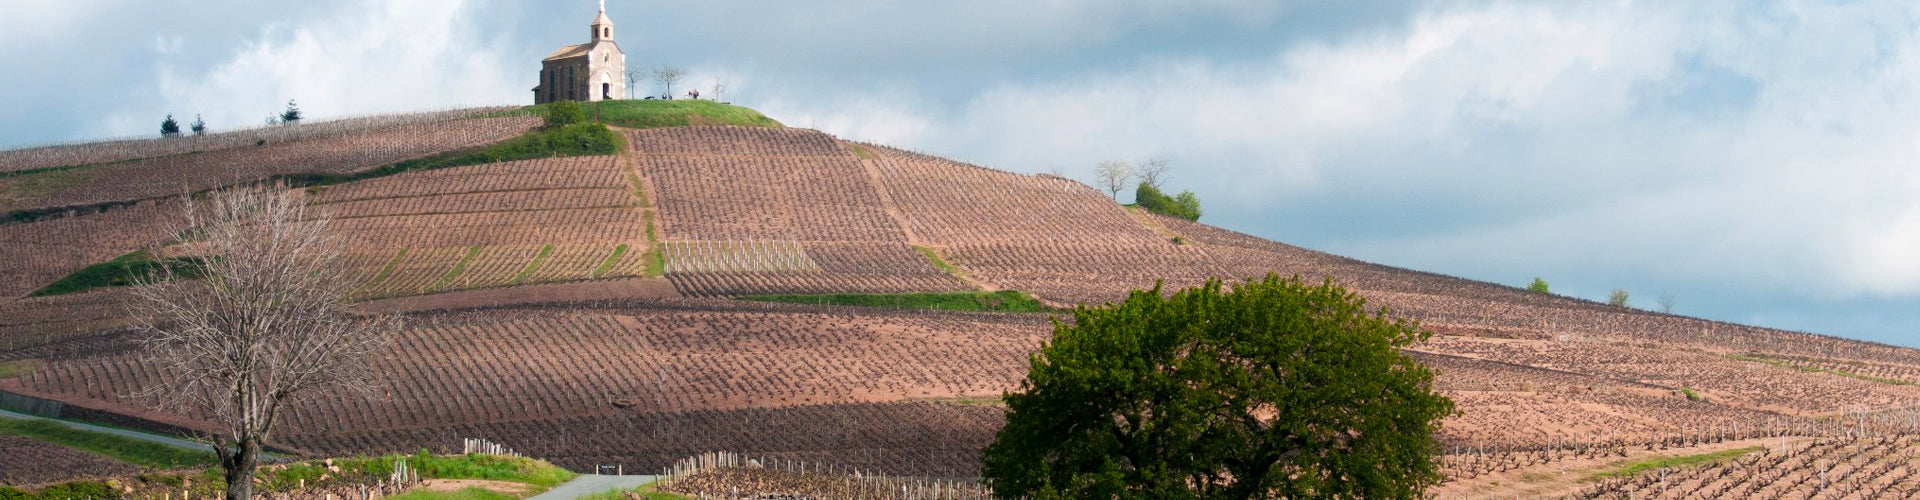 Domaine de la Madone Vineyard in Fleurie